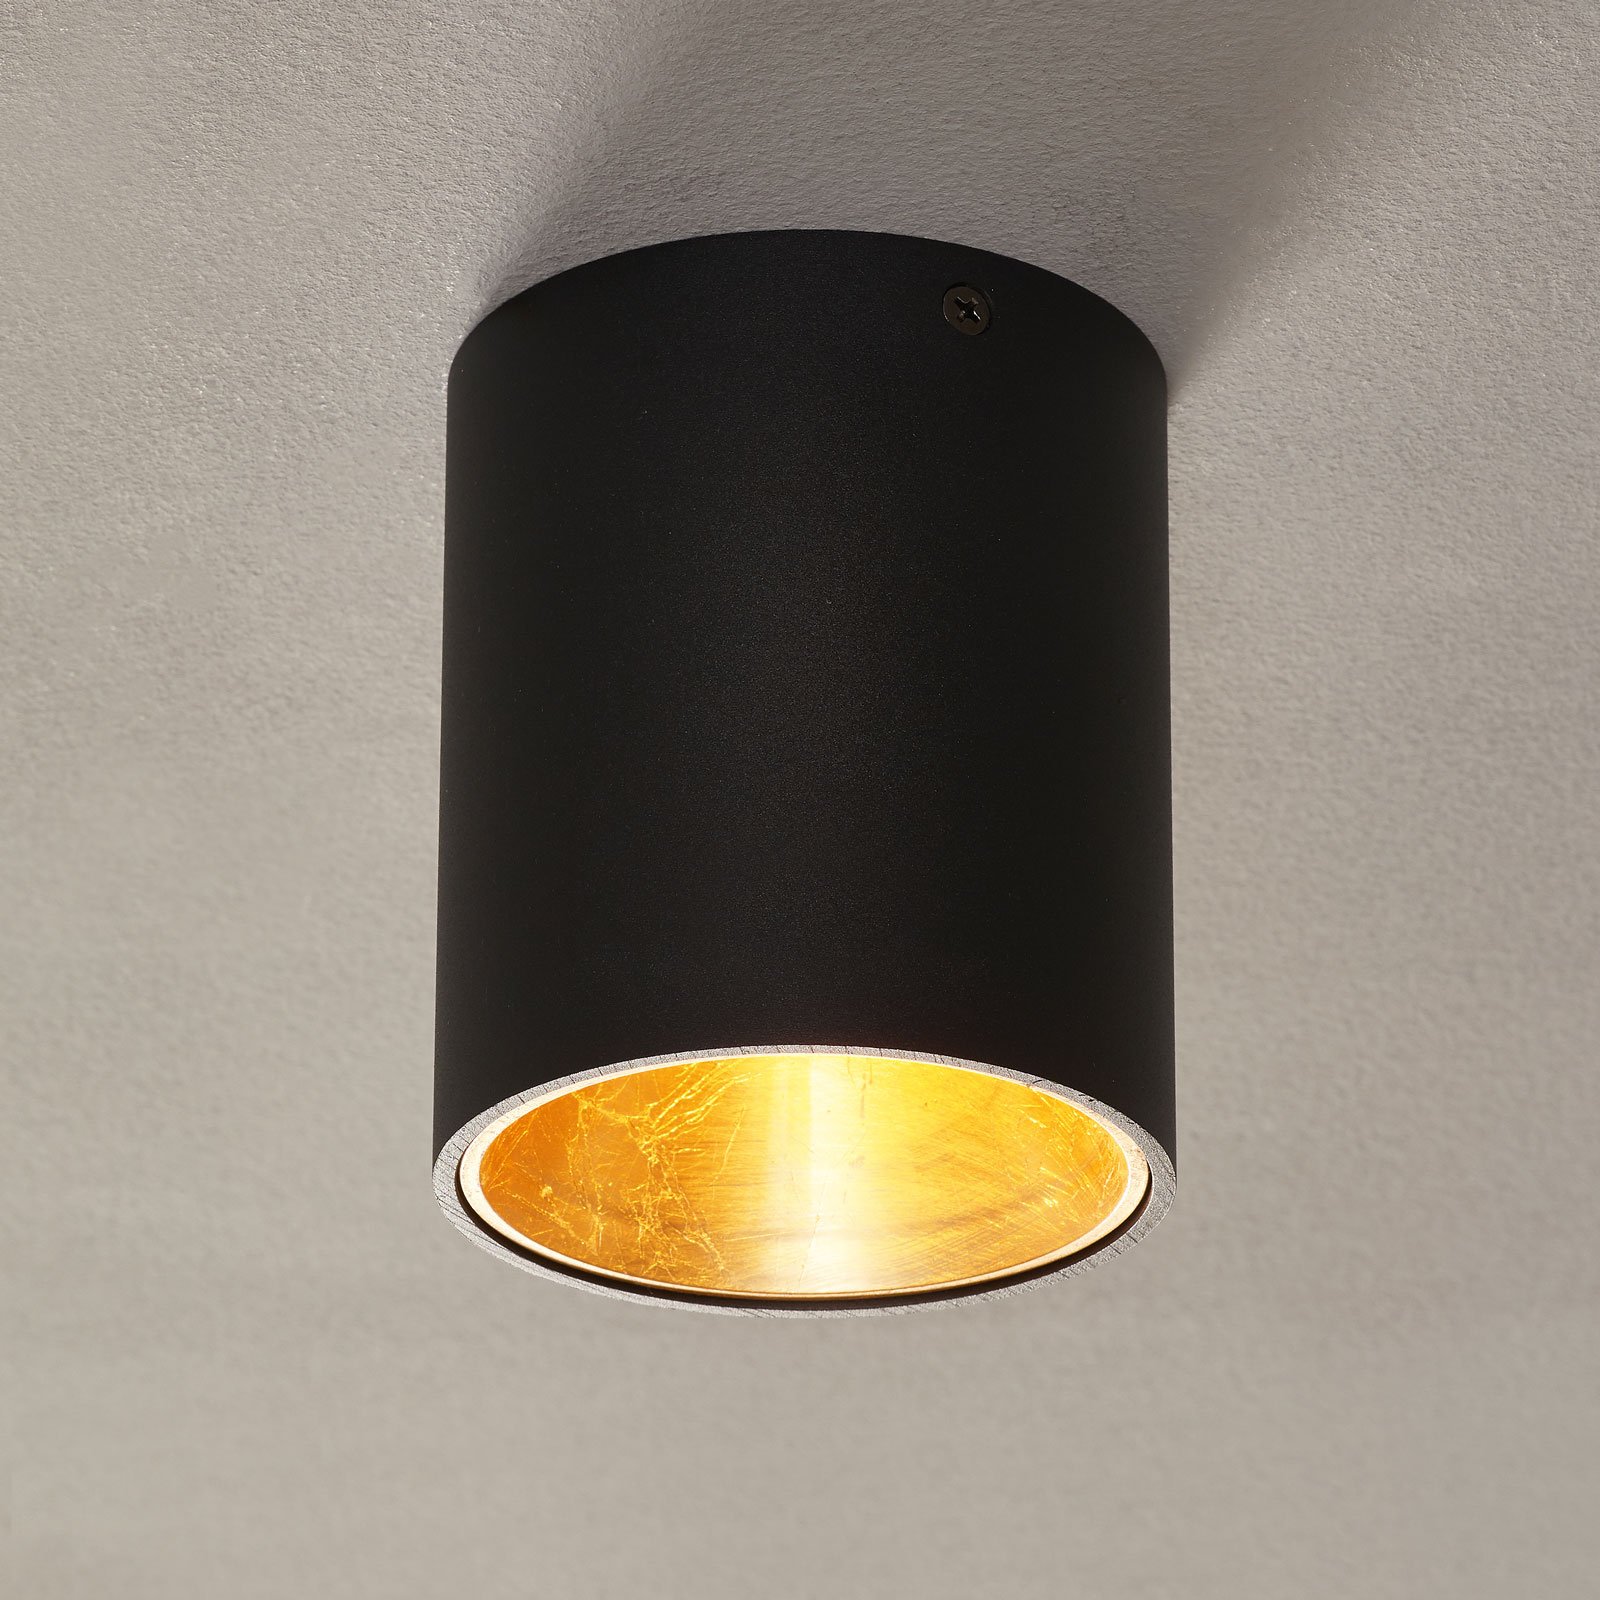 LED-taklampa Polasso rund, svart/guld